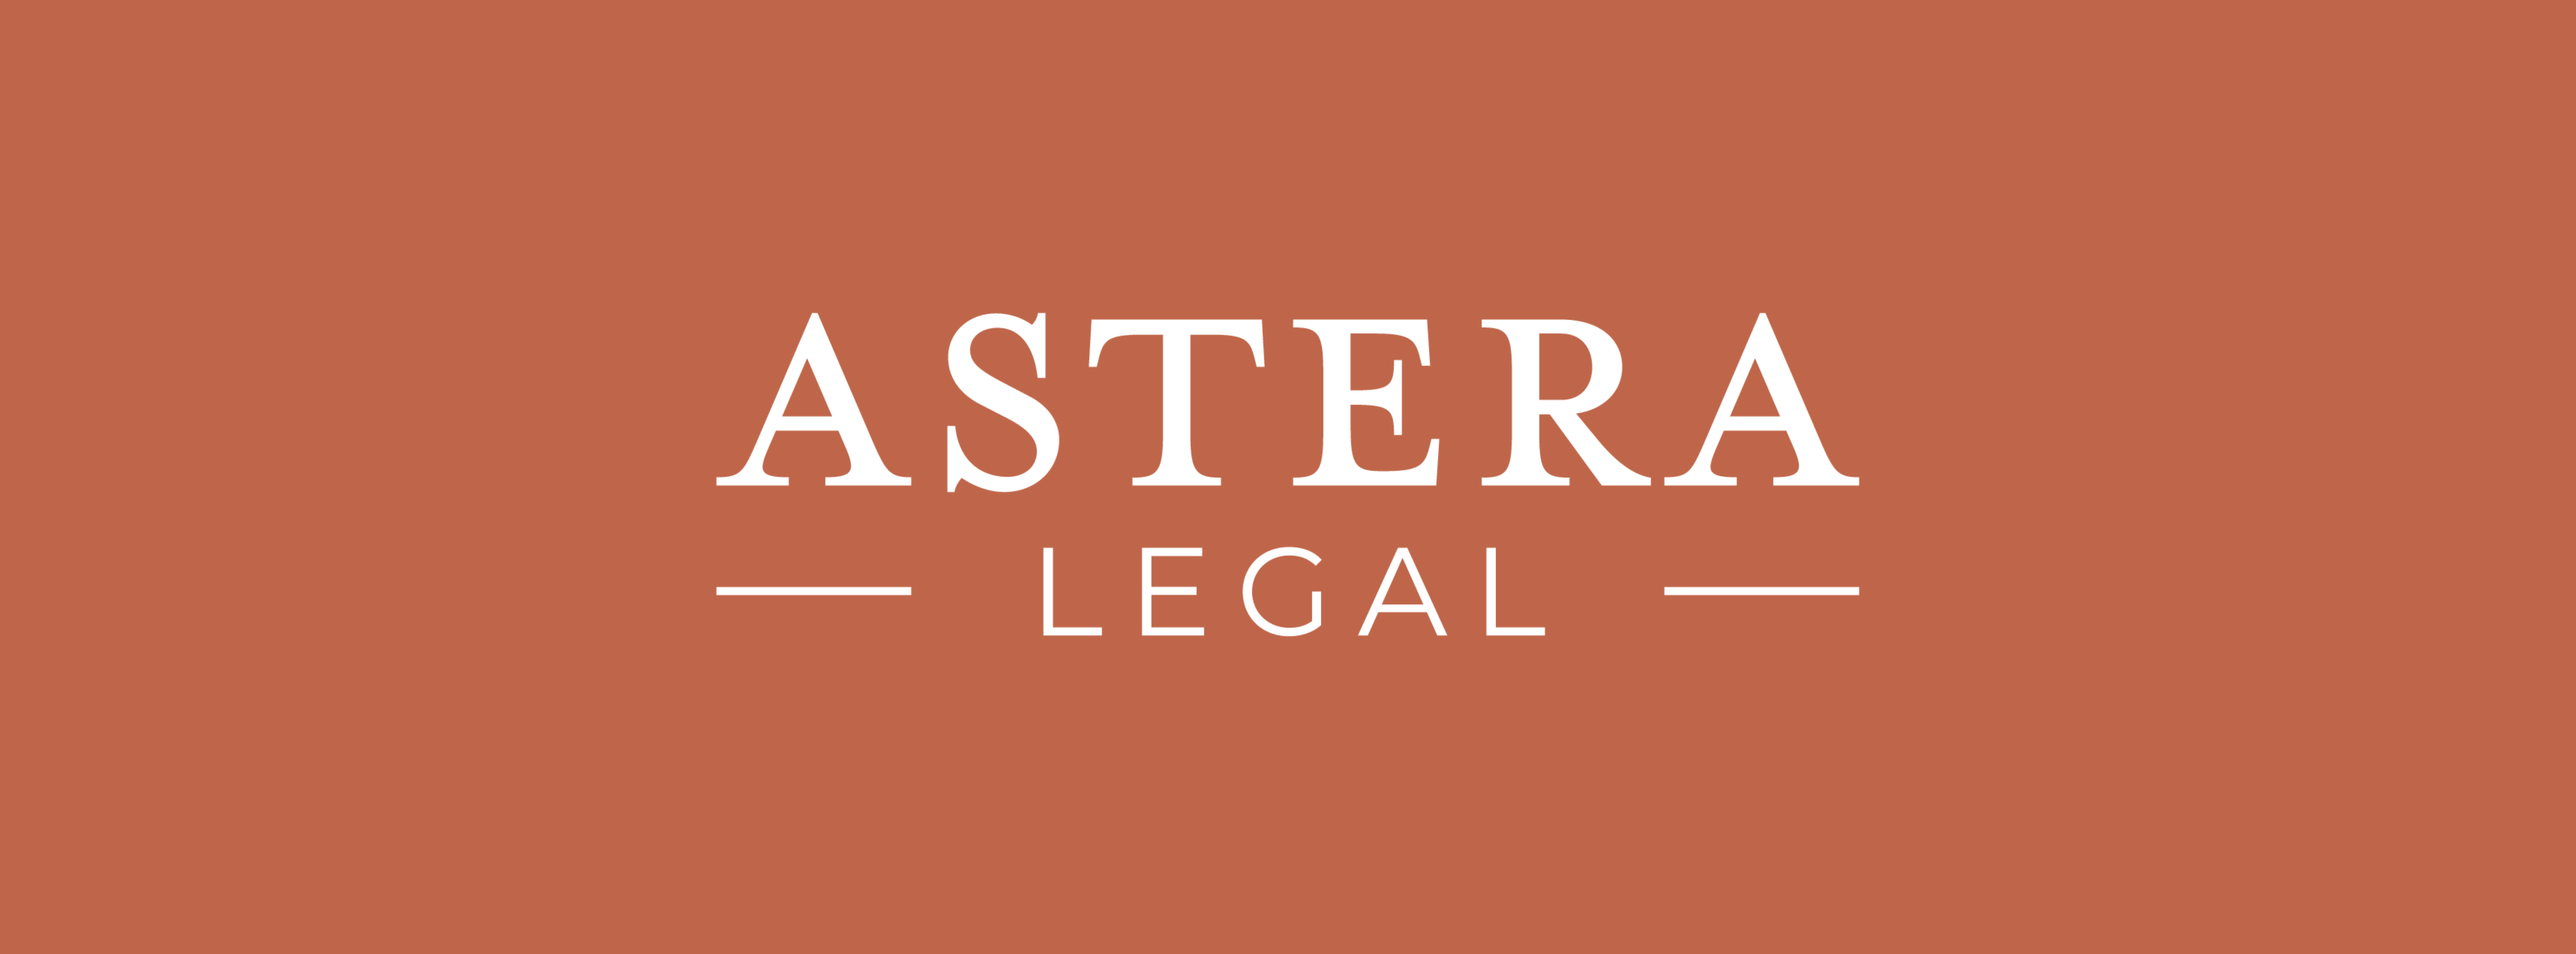 Astera Legal 